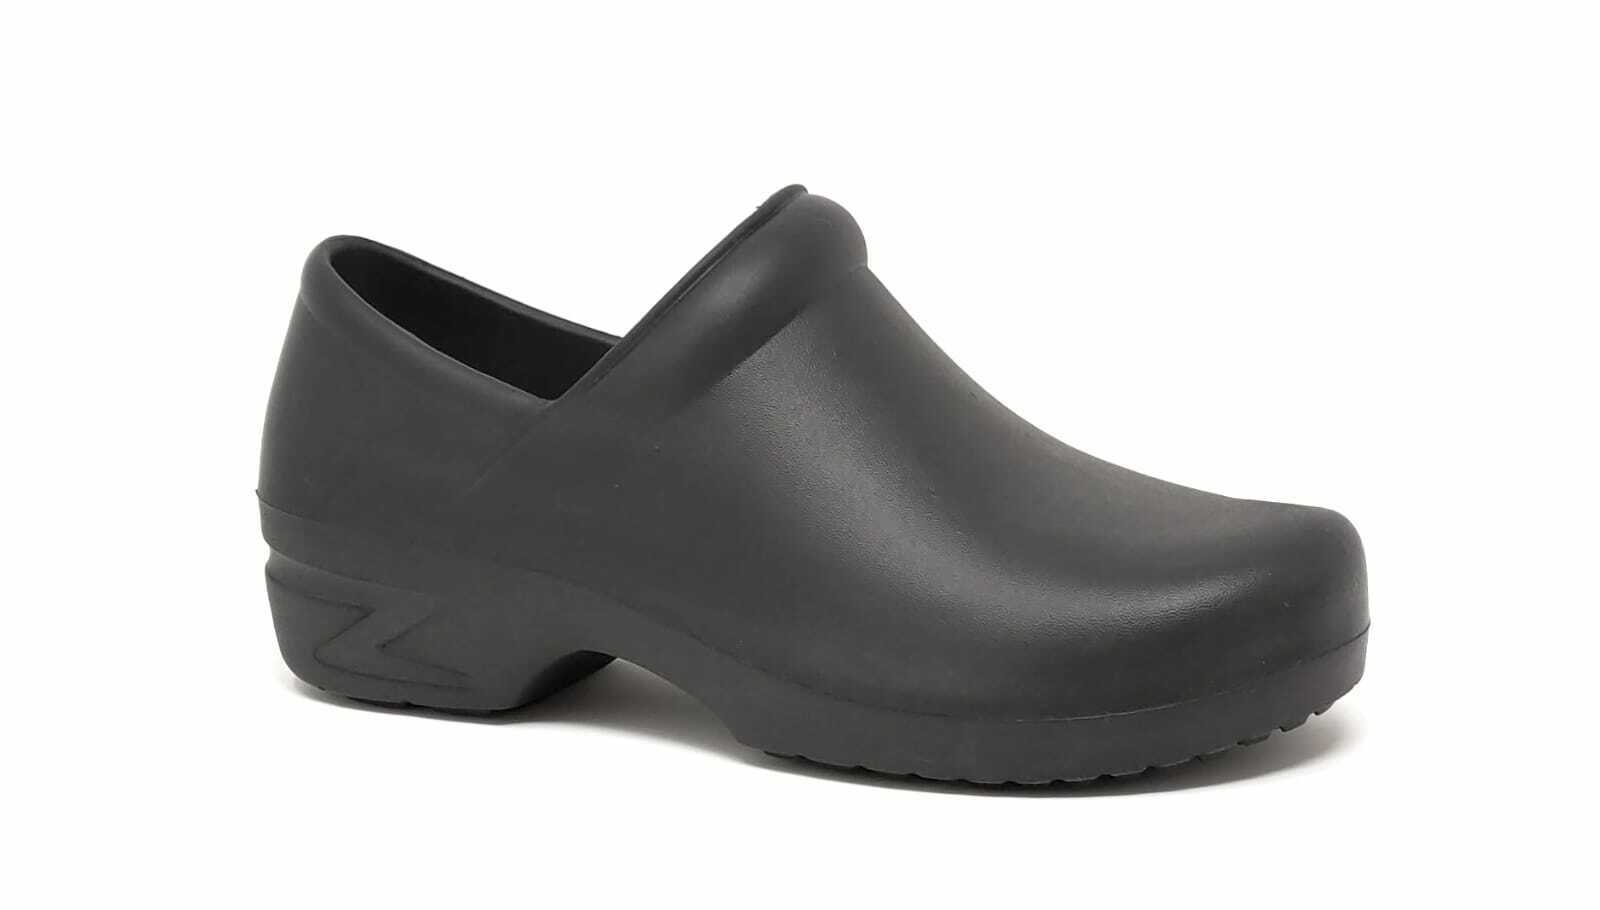 Clogs For Women Slip Resistant Shoes For Women Nurse Shoes Black Full Size Clog